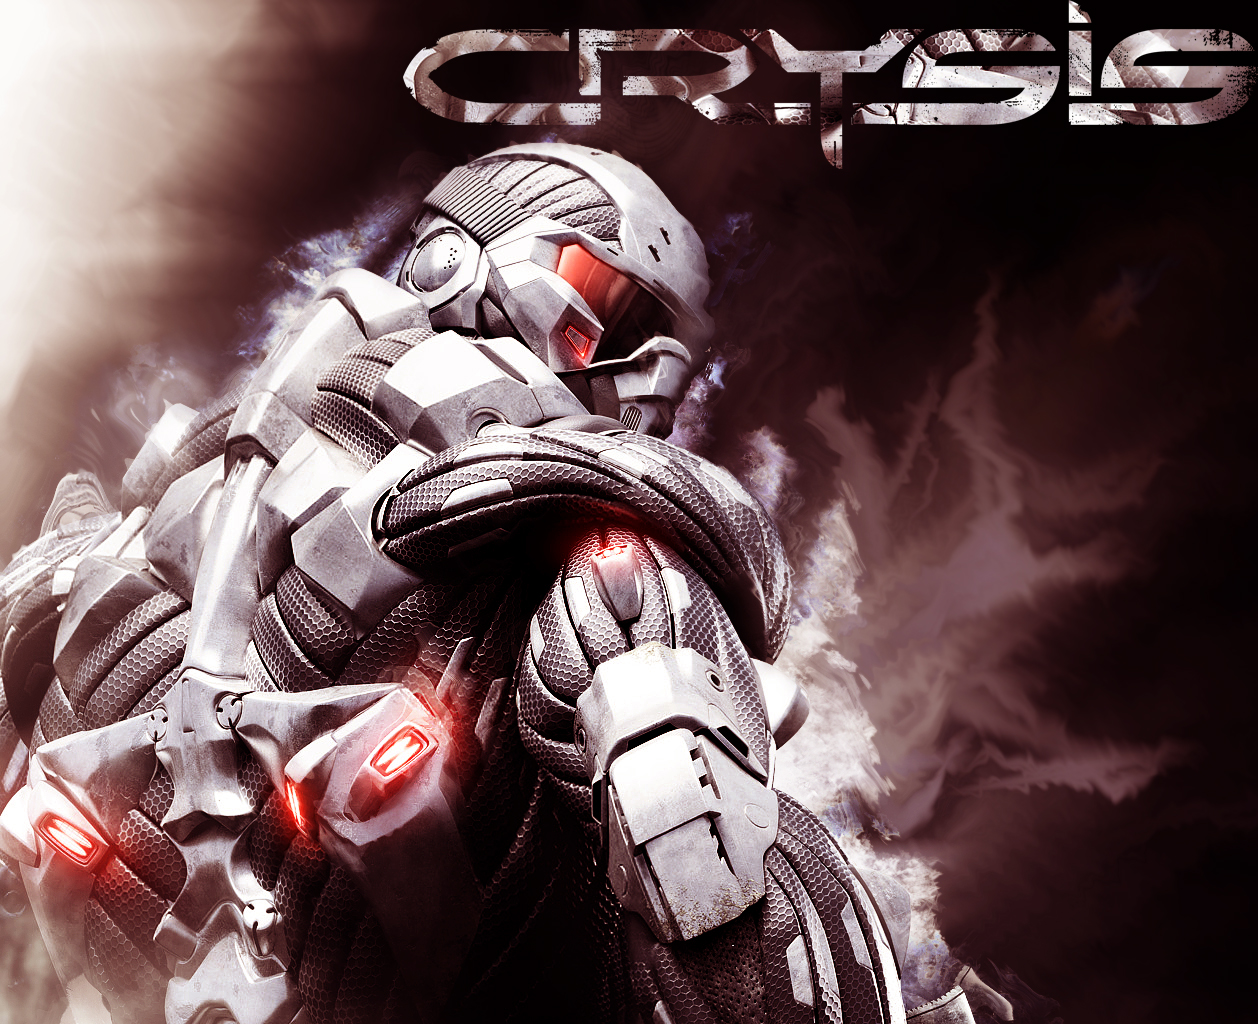 crysis 4 download